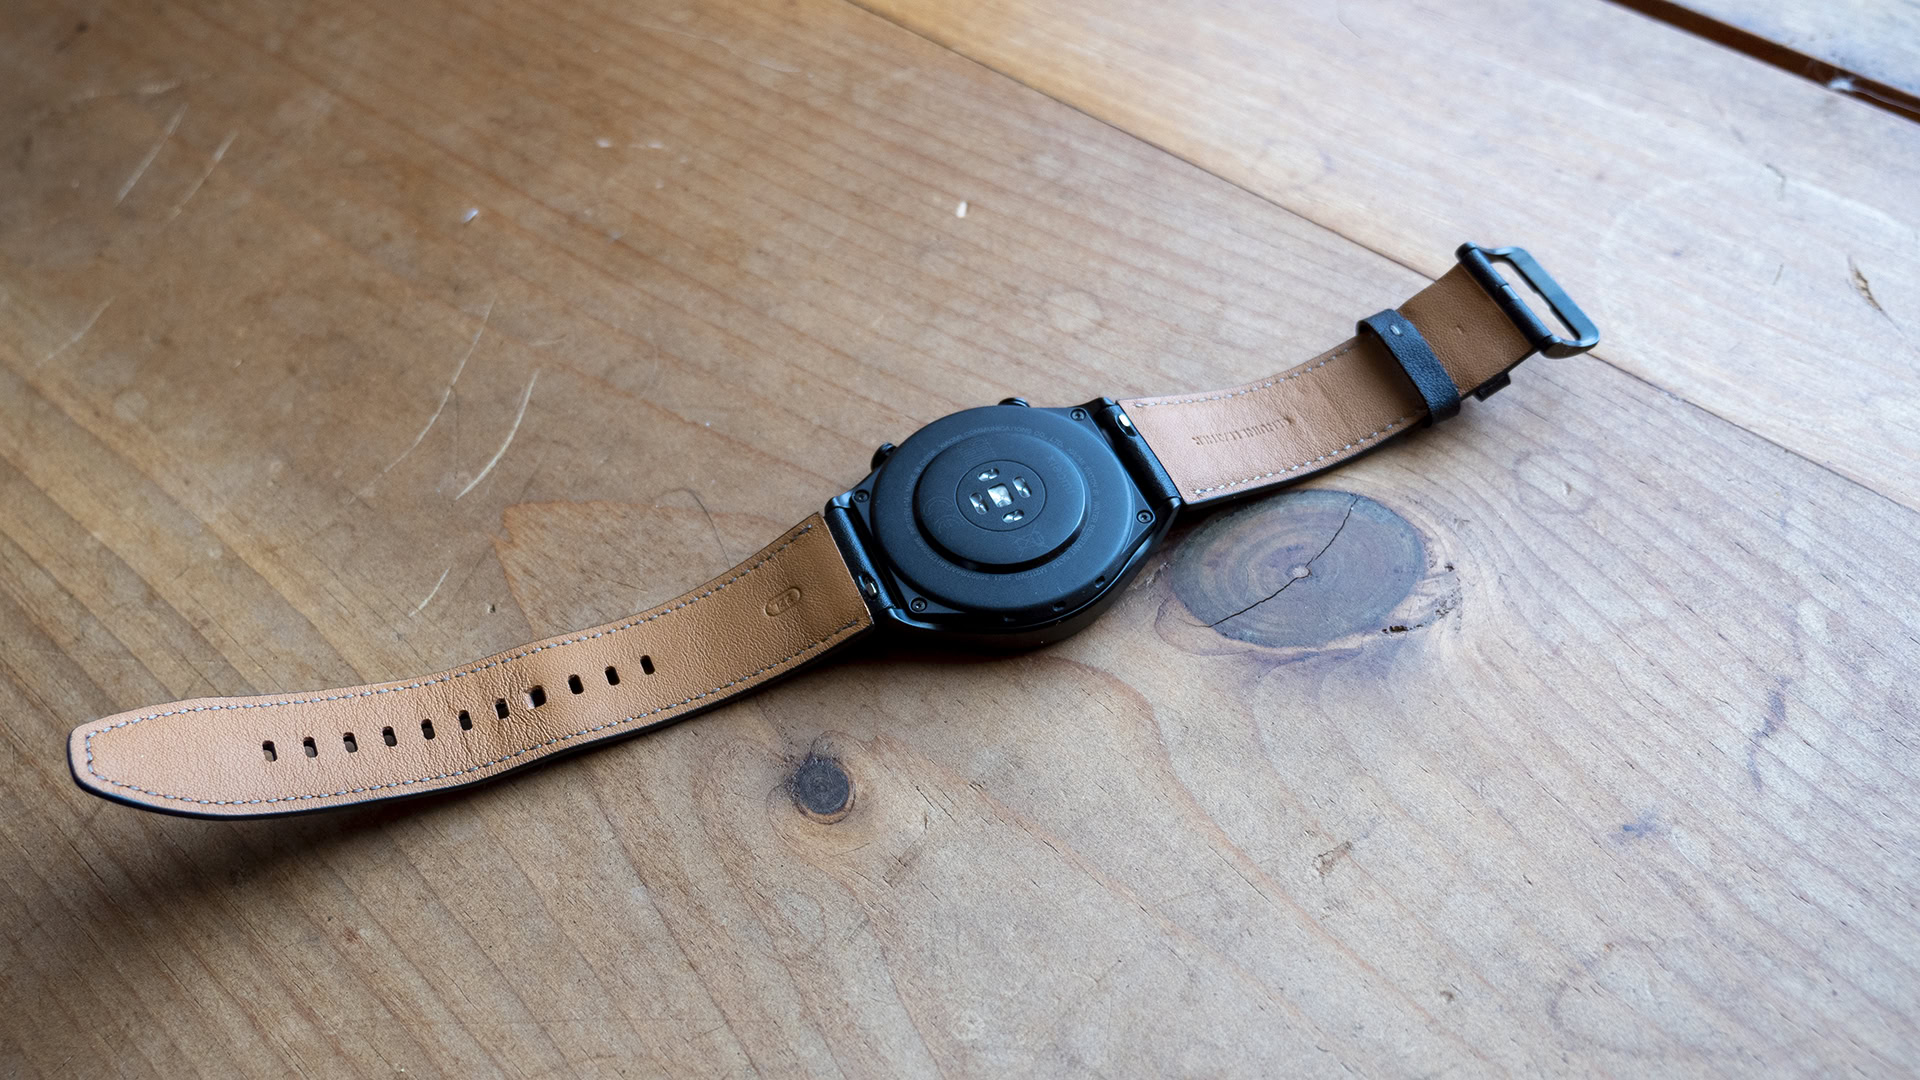 Xiaomi Watch S1 Active review: a potential winner - Digital Citizen